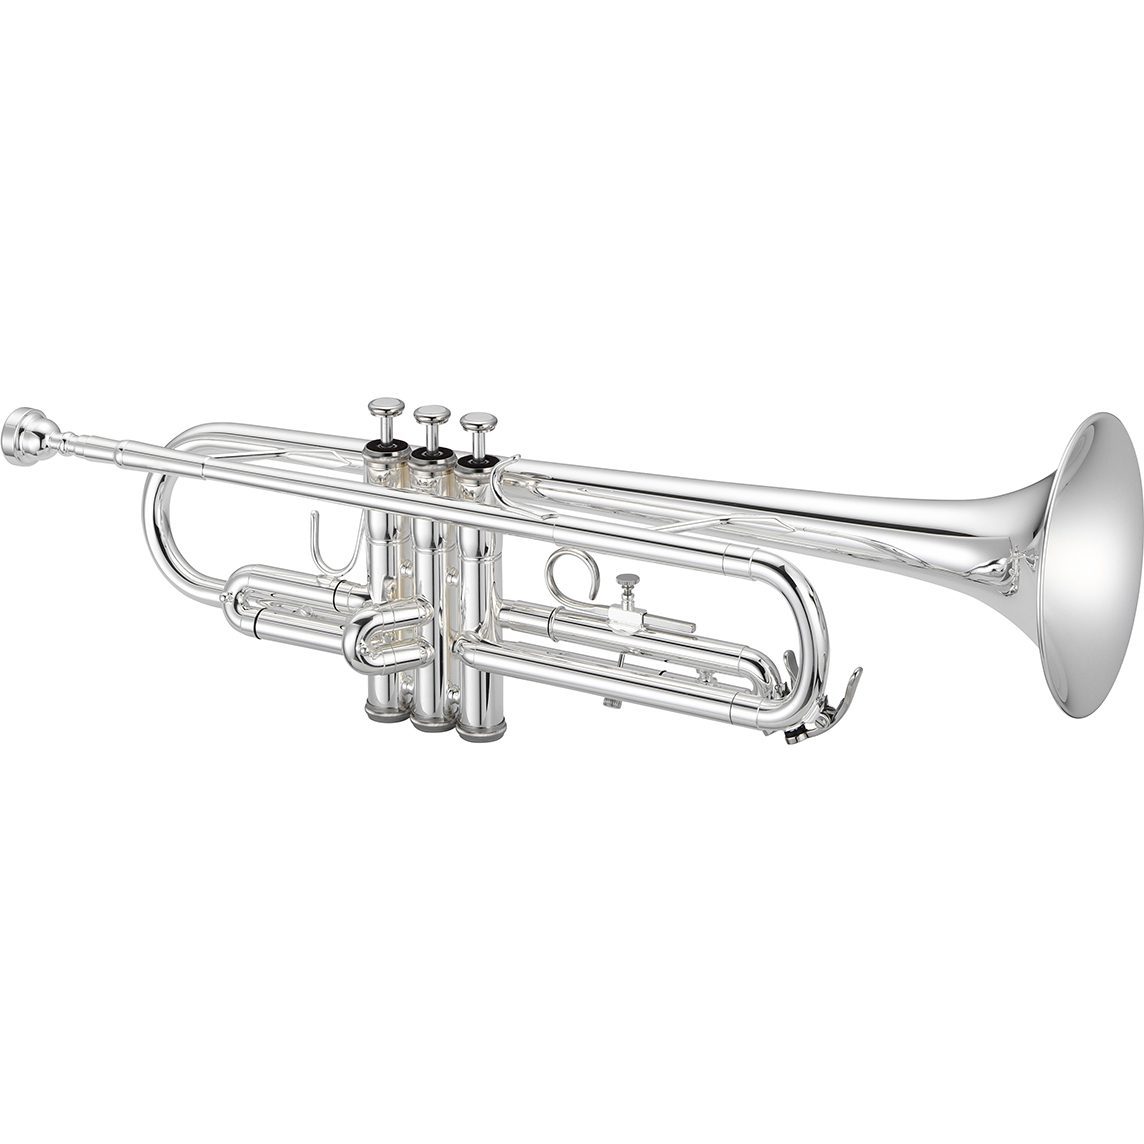 Prelude Duet Student Trumpet - Nickel Finish